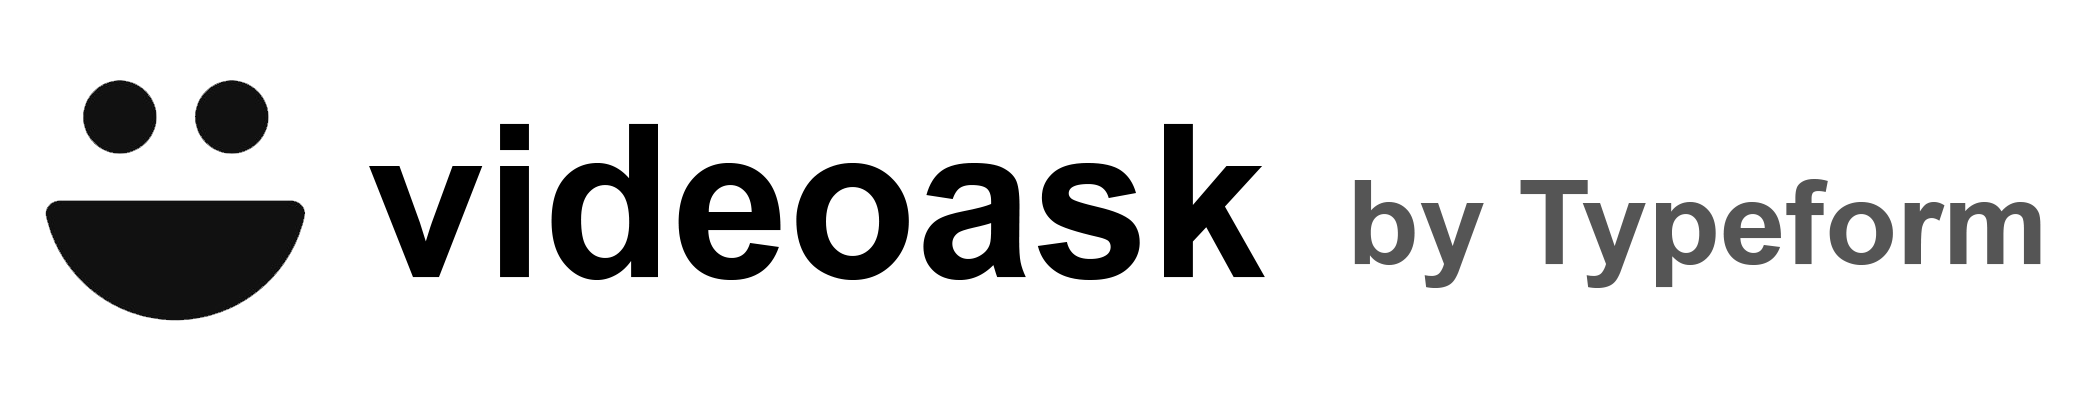 Videoask-logo